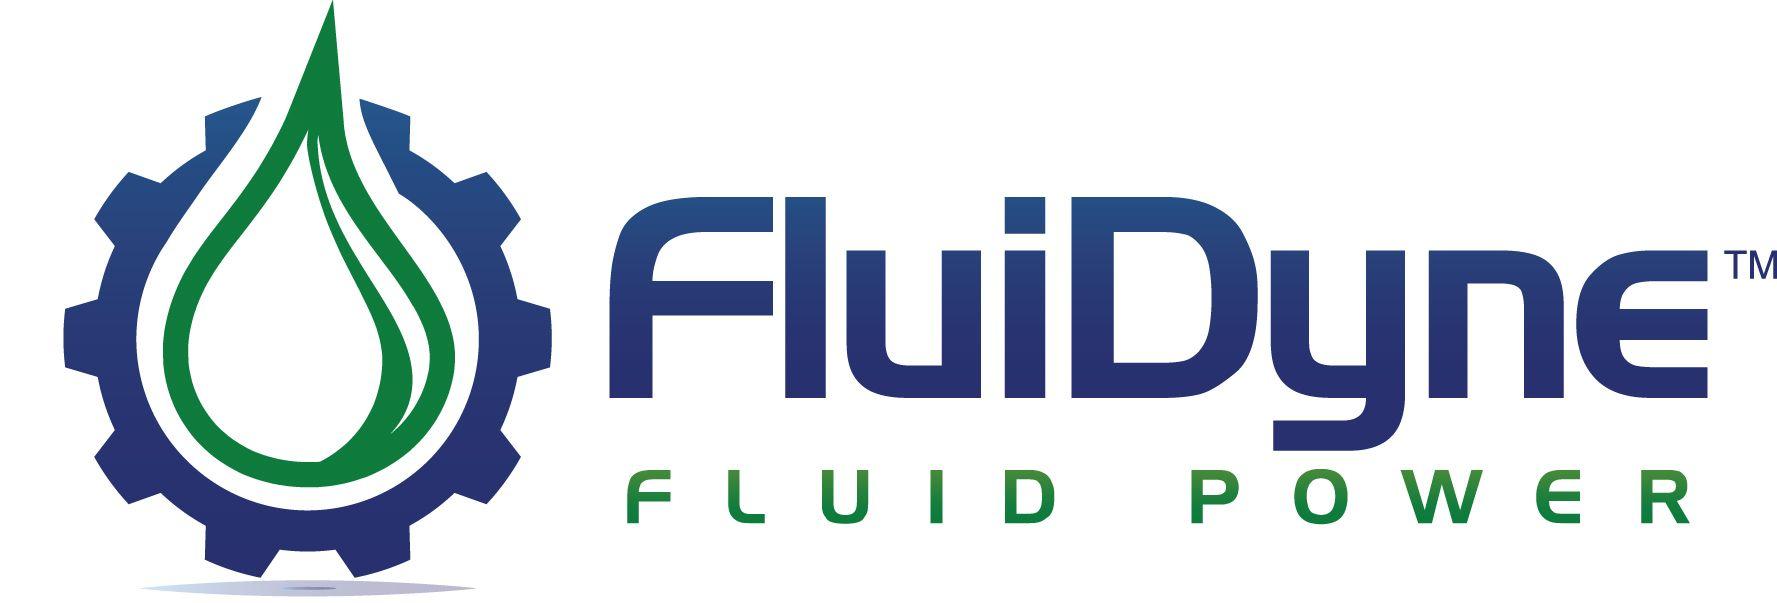 Hydraulics Logo - FPC&E - Vanderbilt